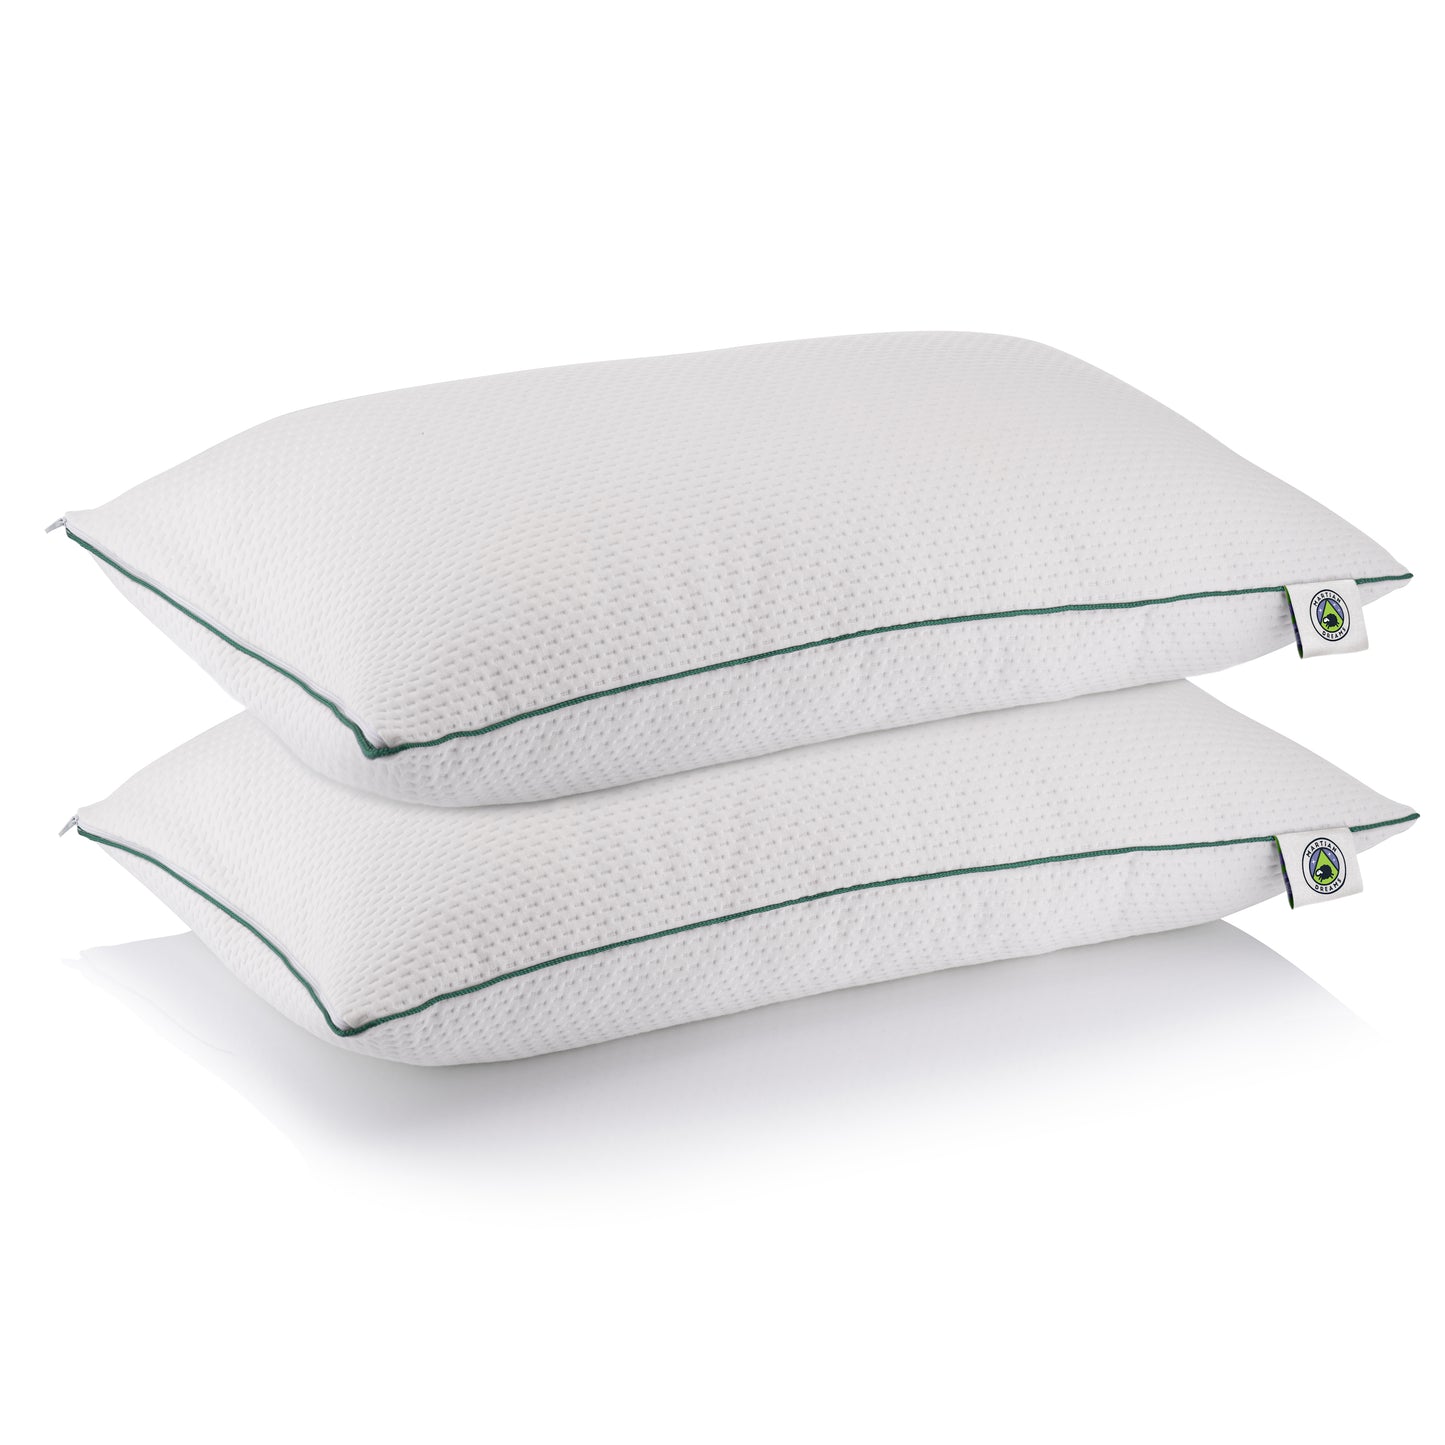 Martian Dreams Hotel Microfibre Pillows 2 Pack